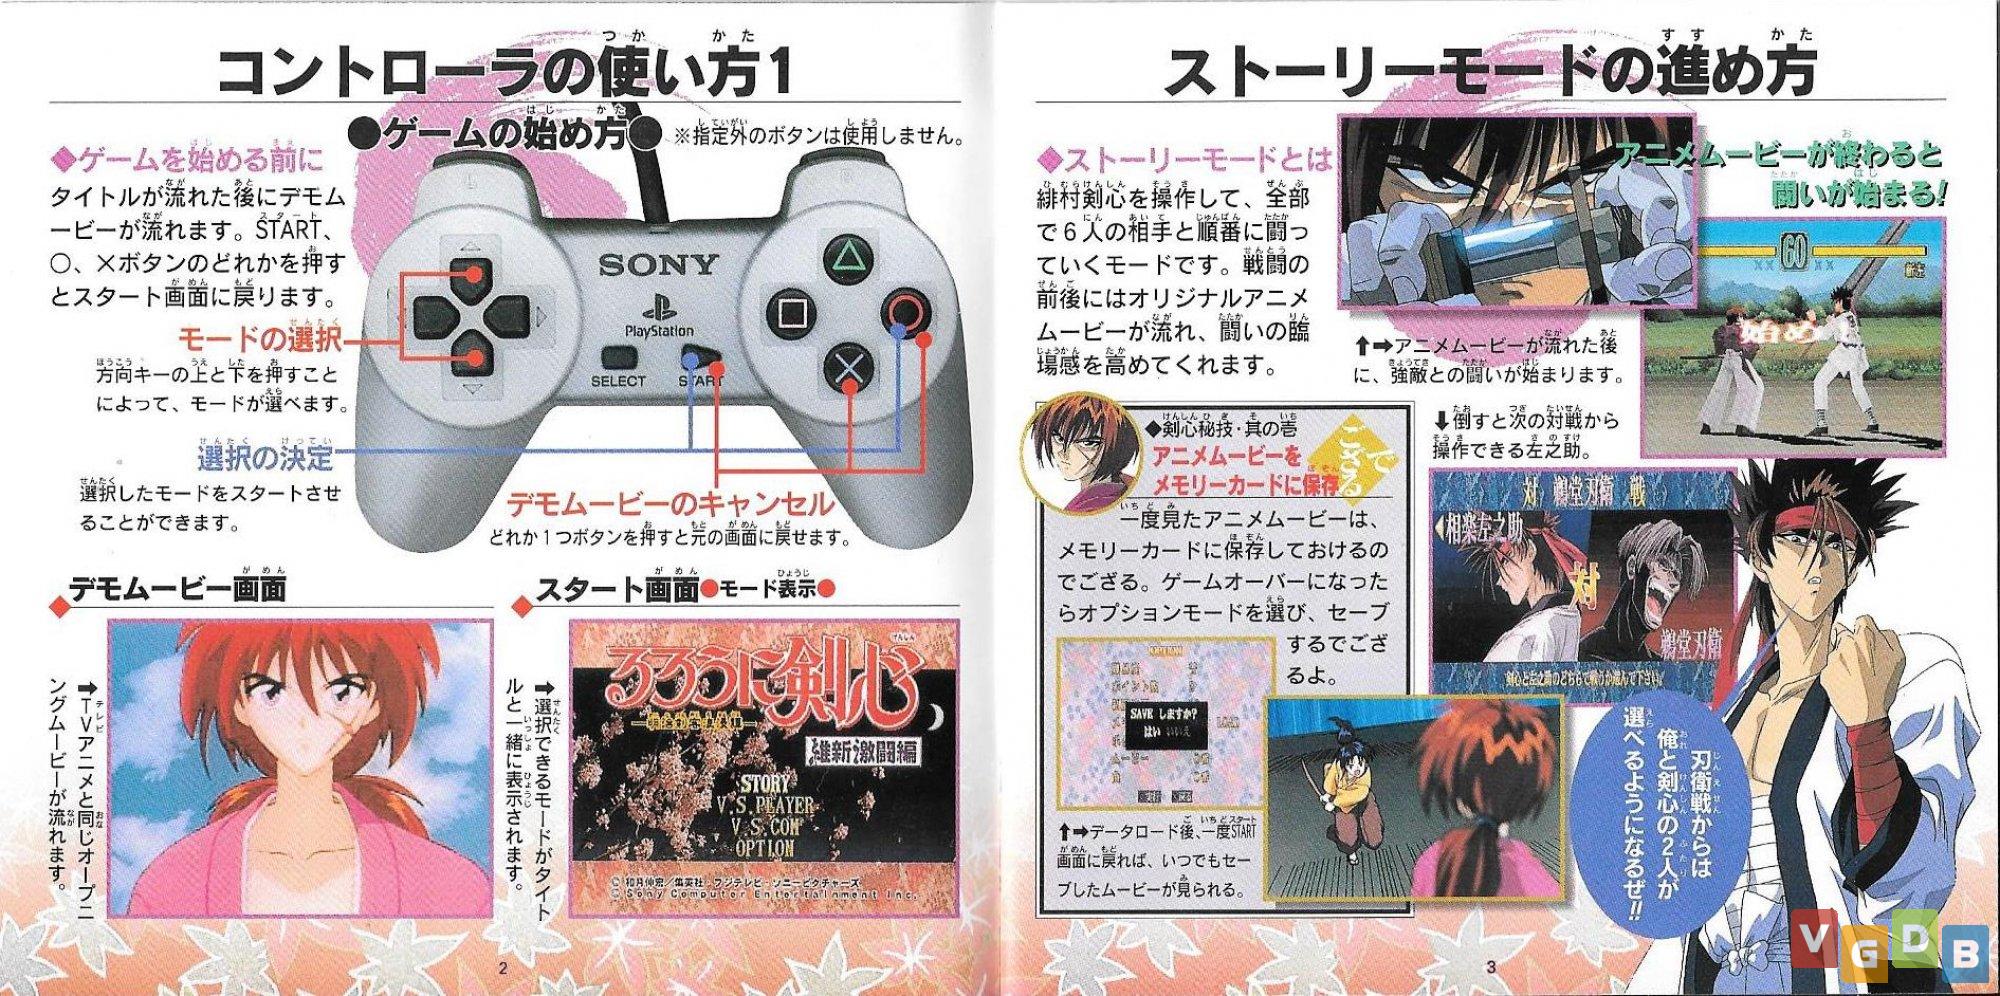 Rurouni Kenshin Meiji Kenkaku Romantan PS1 with Manual PlayStation 1  Japanese